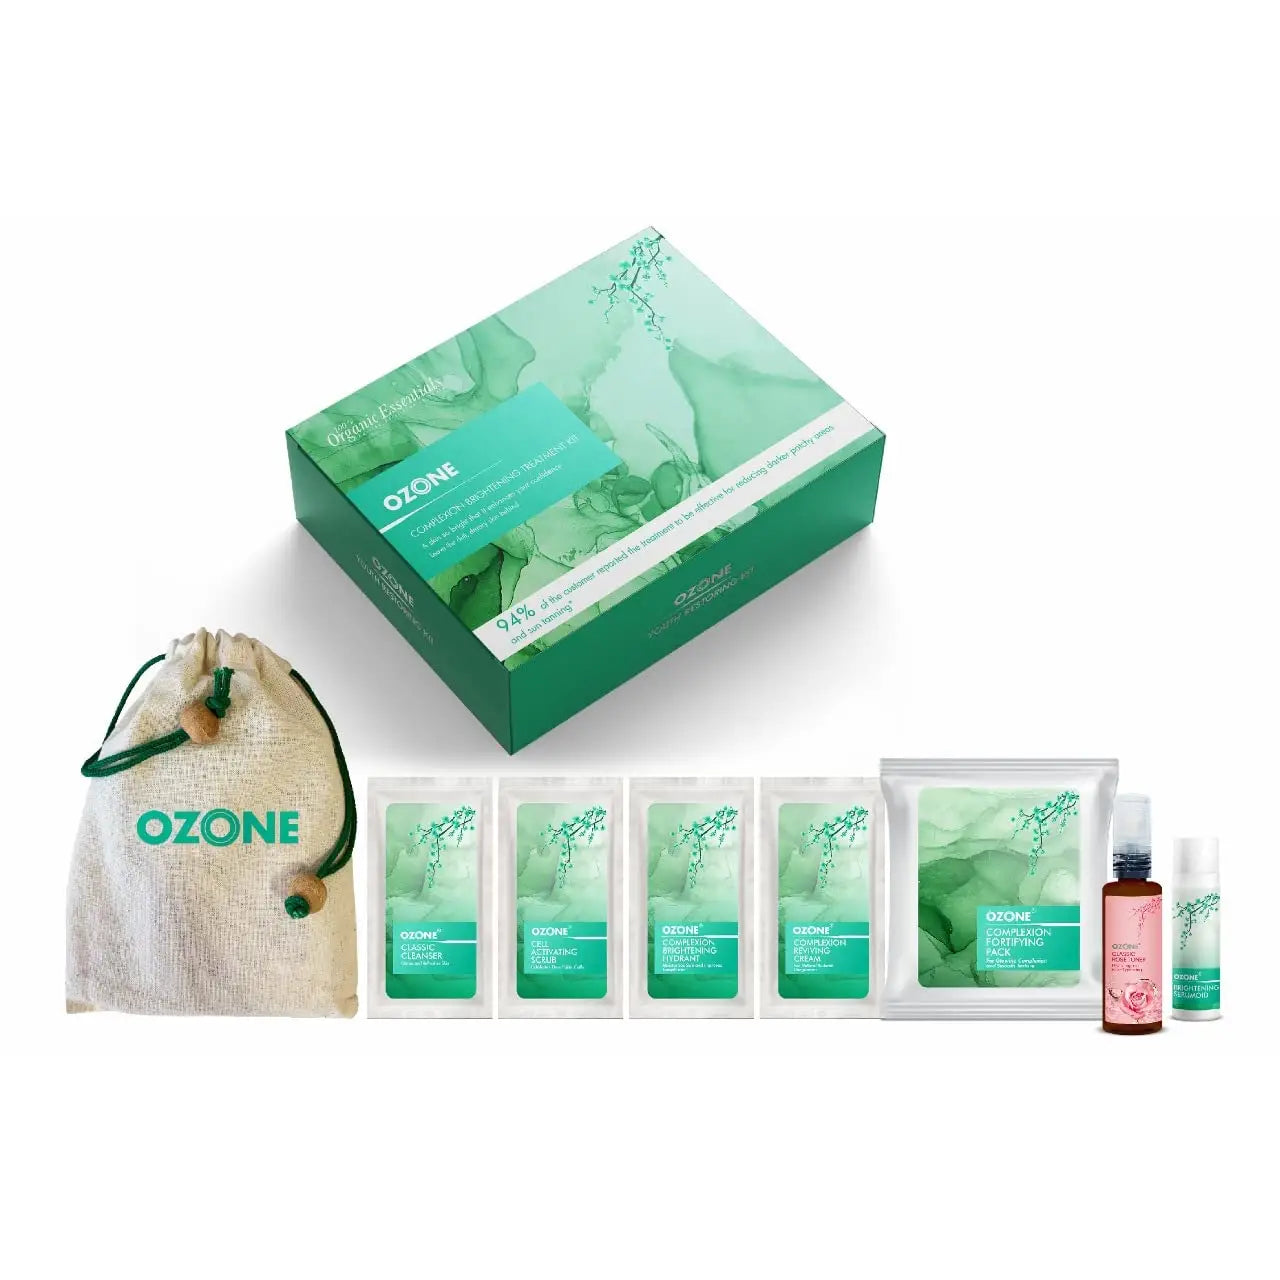 OZONE Complexion Brightening Treatment Kit